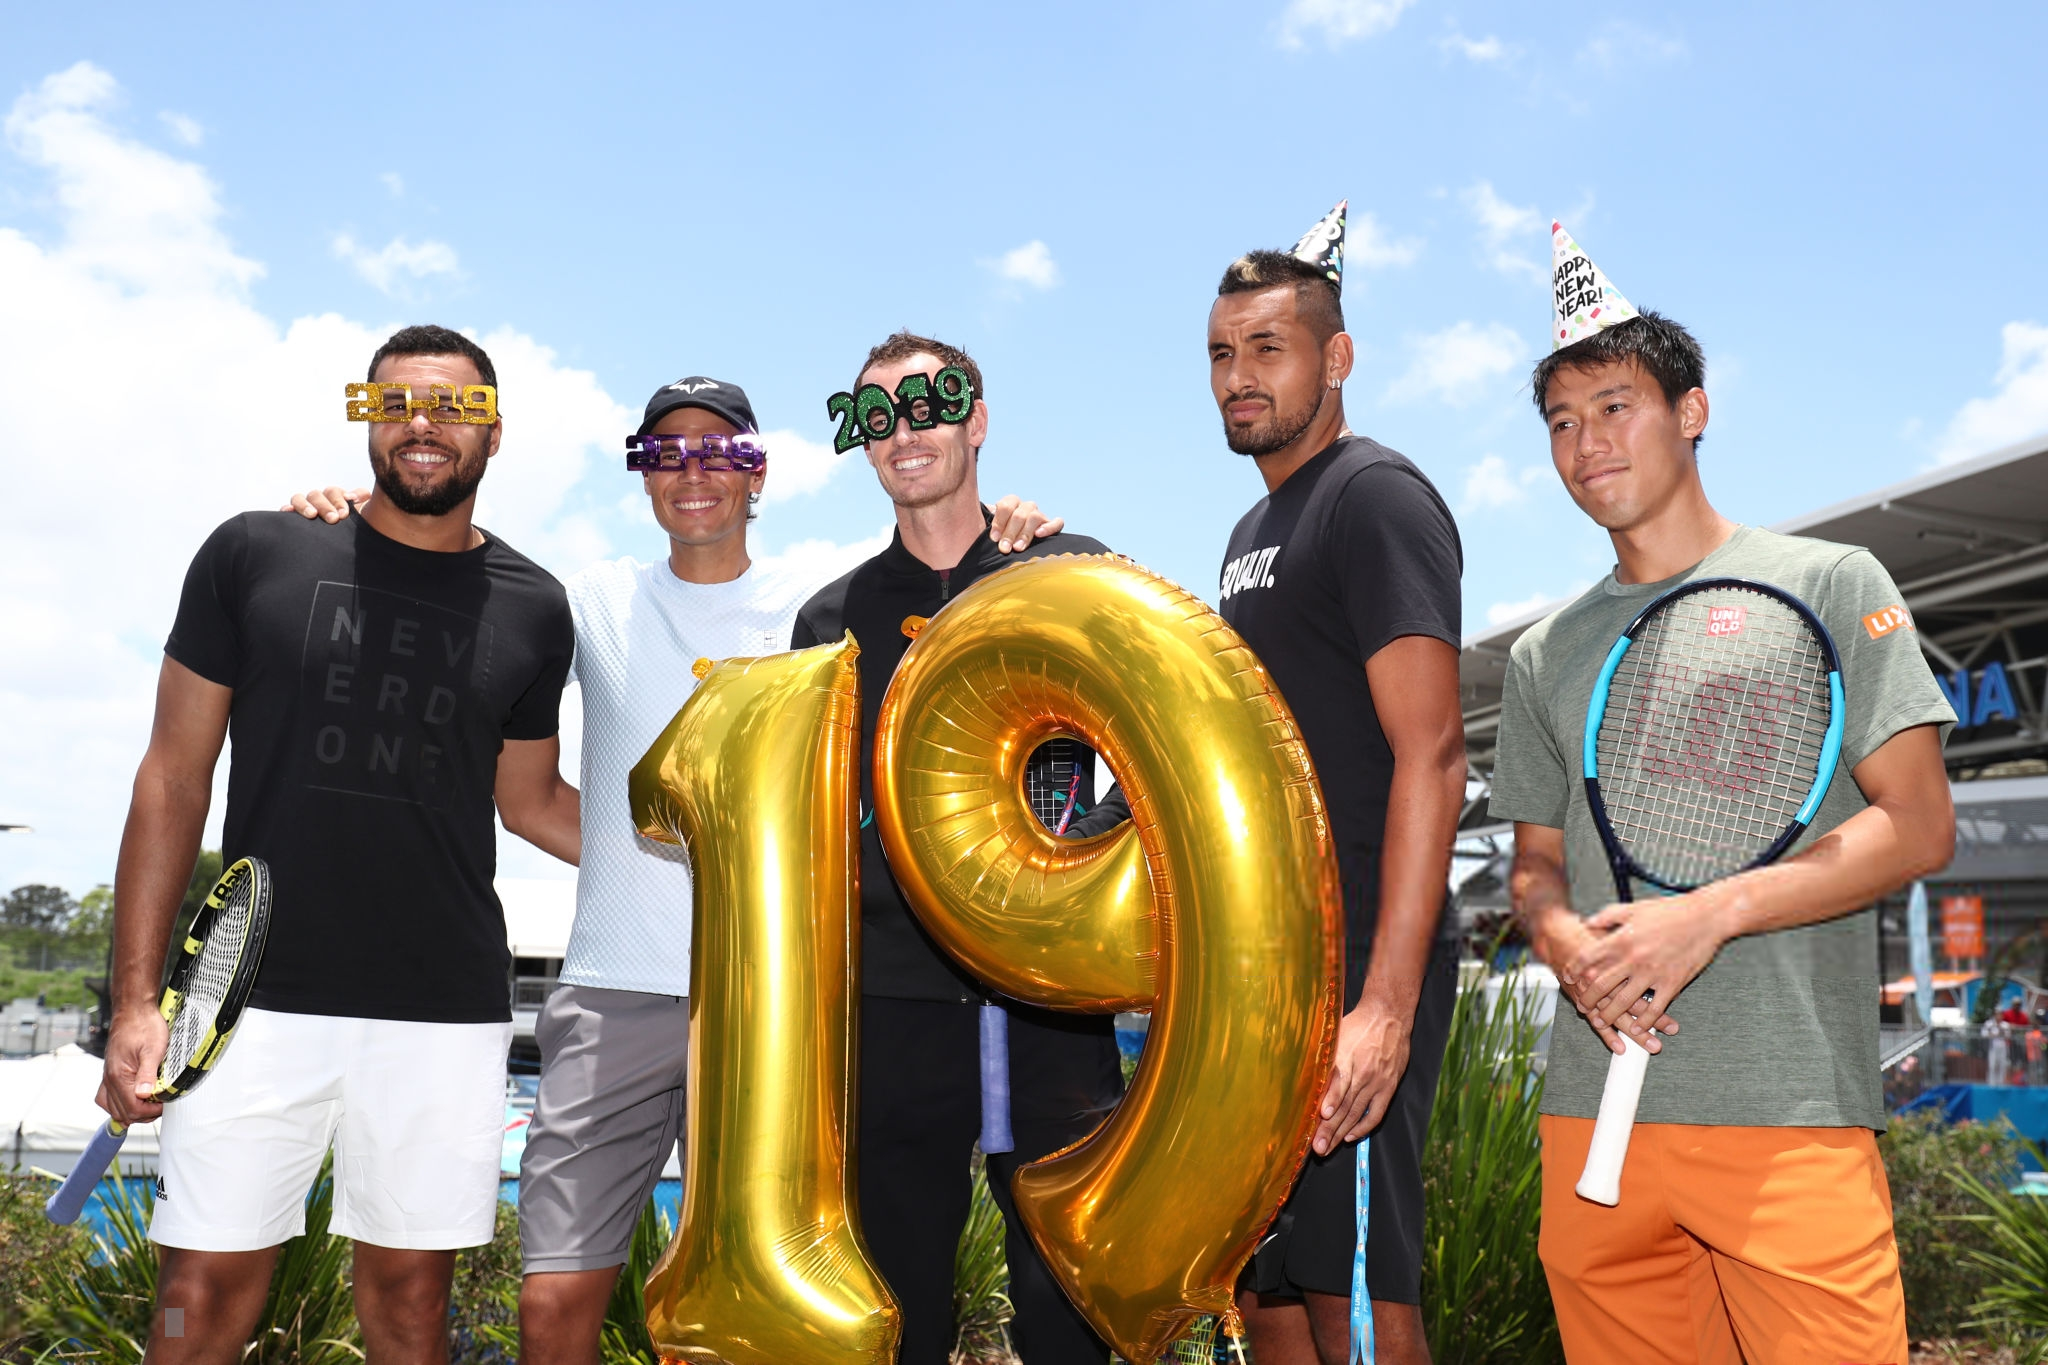 Jo-Wilfried-Tsonga-Rafael-Nadal-Andy-Murray-Nick-Kyrgios-and-Kei-Nishikori-pose-for-a-New-Years-themed-photo-outside-Pat-Rafter-Arena-for-Brisbane-International-2019-7.png